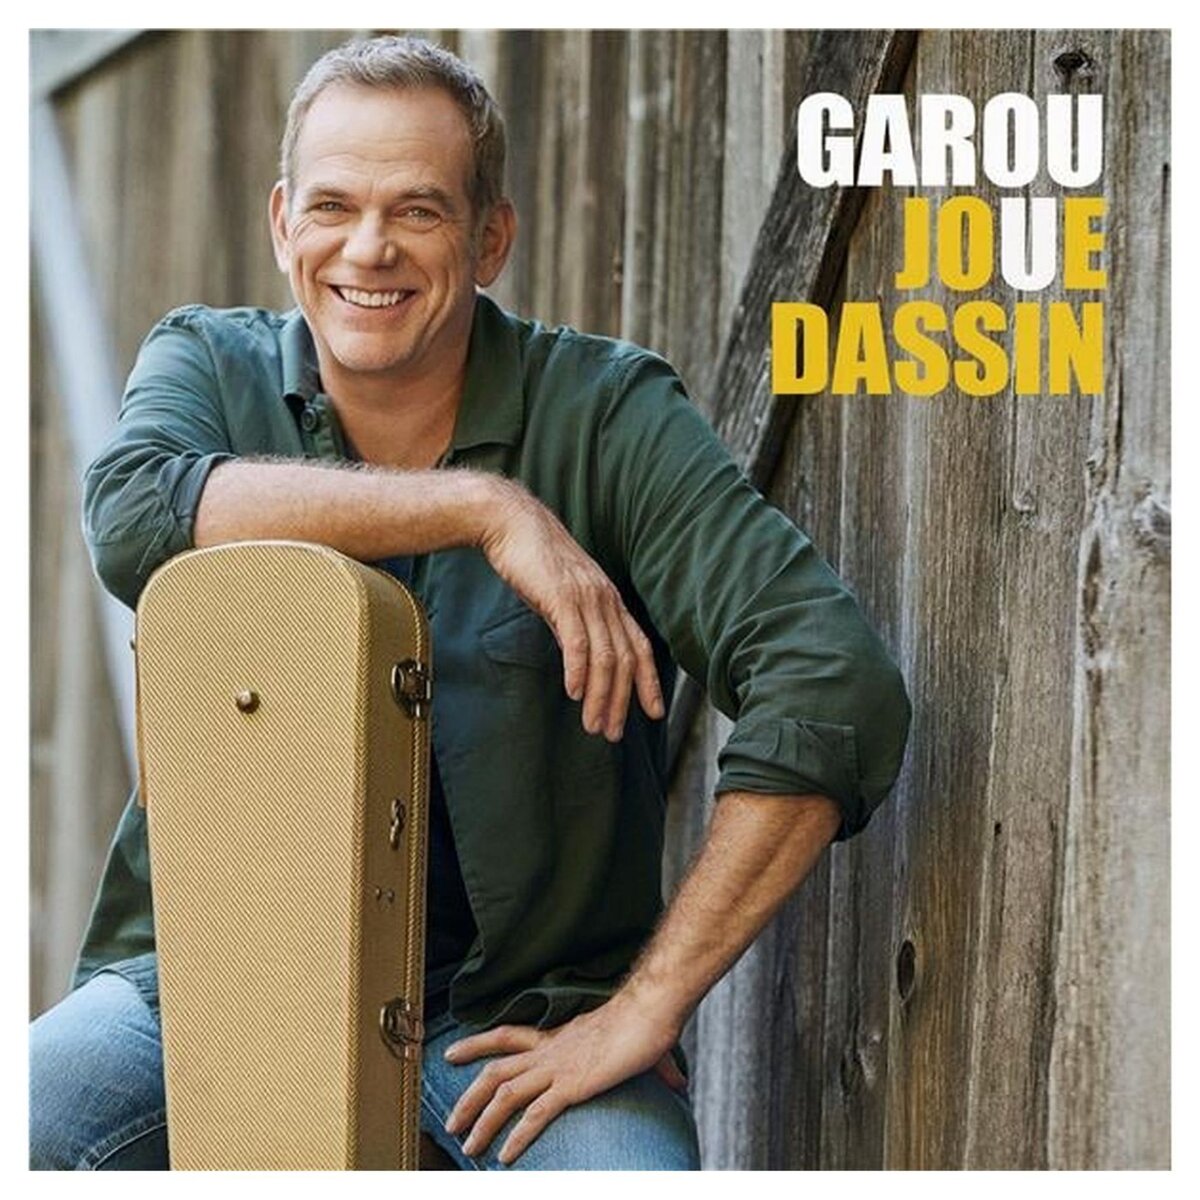 Garou joue Dassin CD